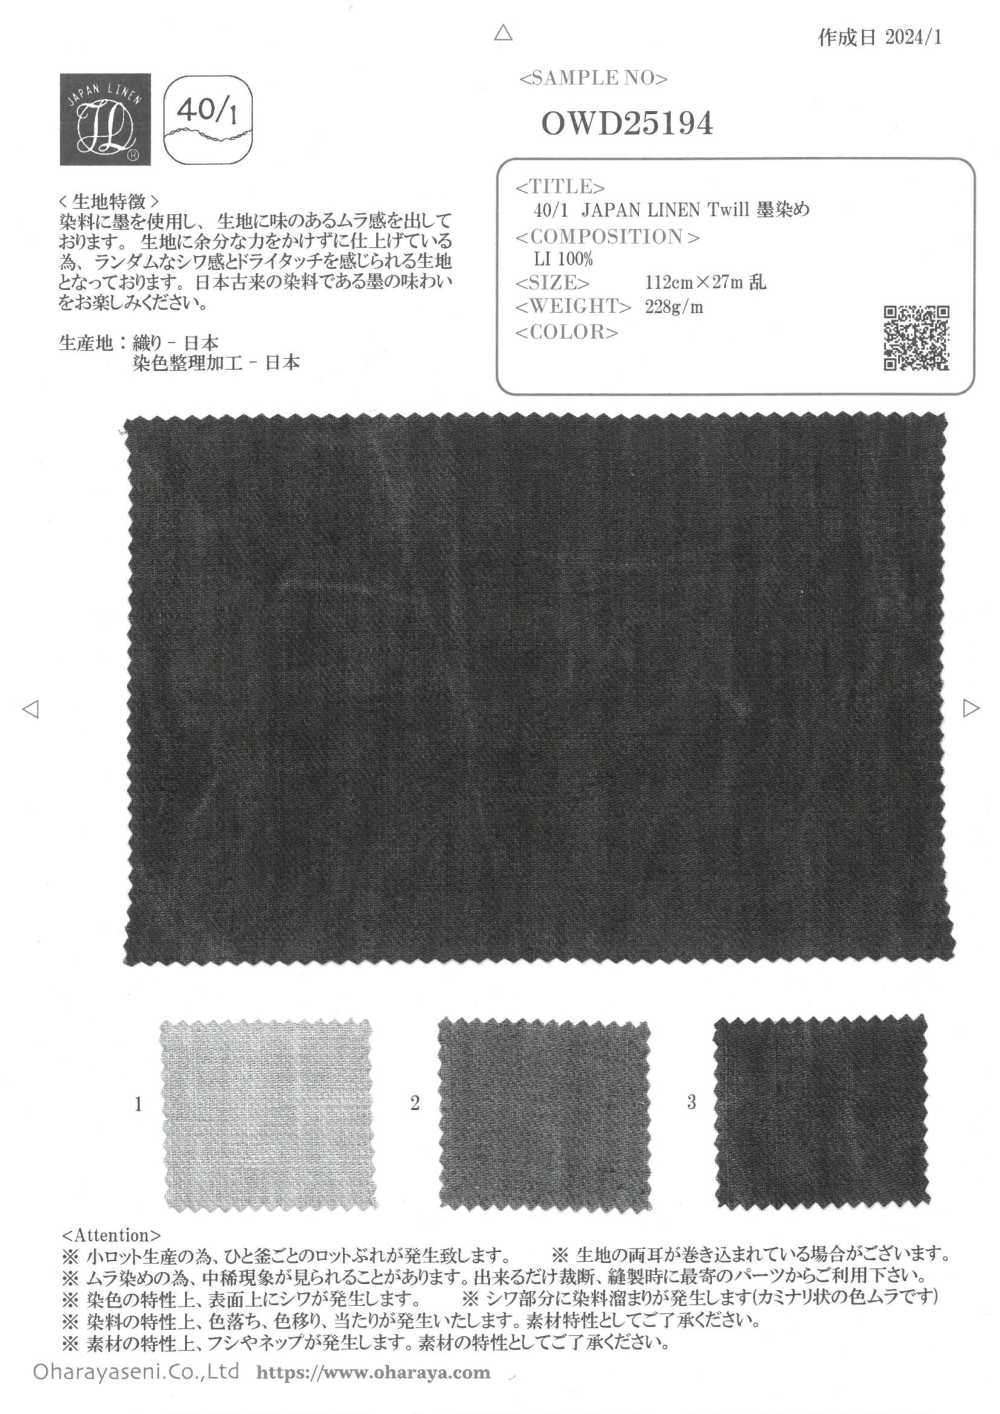 OWD25194 40/1 JAPAN LINEN Twill Ink Dyed[Textile / Fabric] Oharayaseni